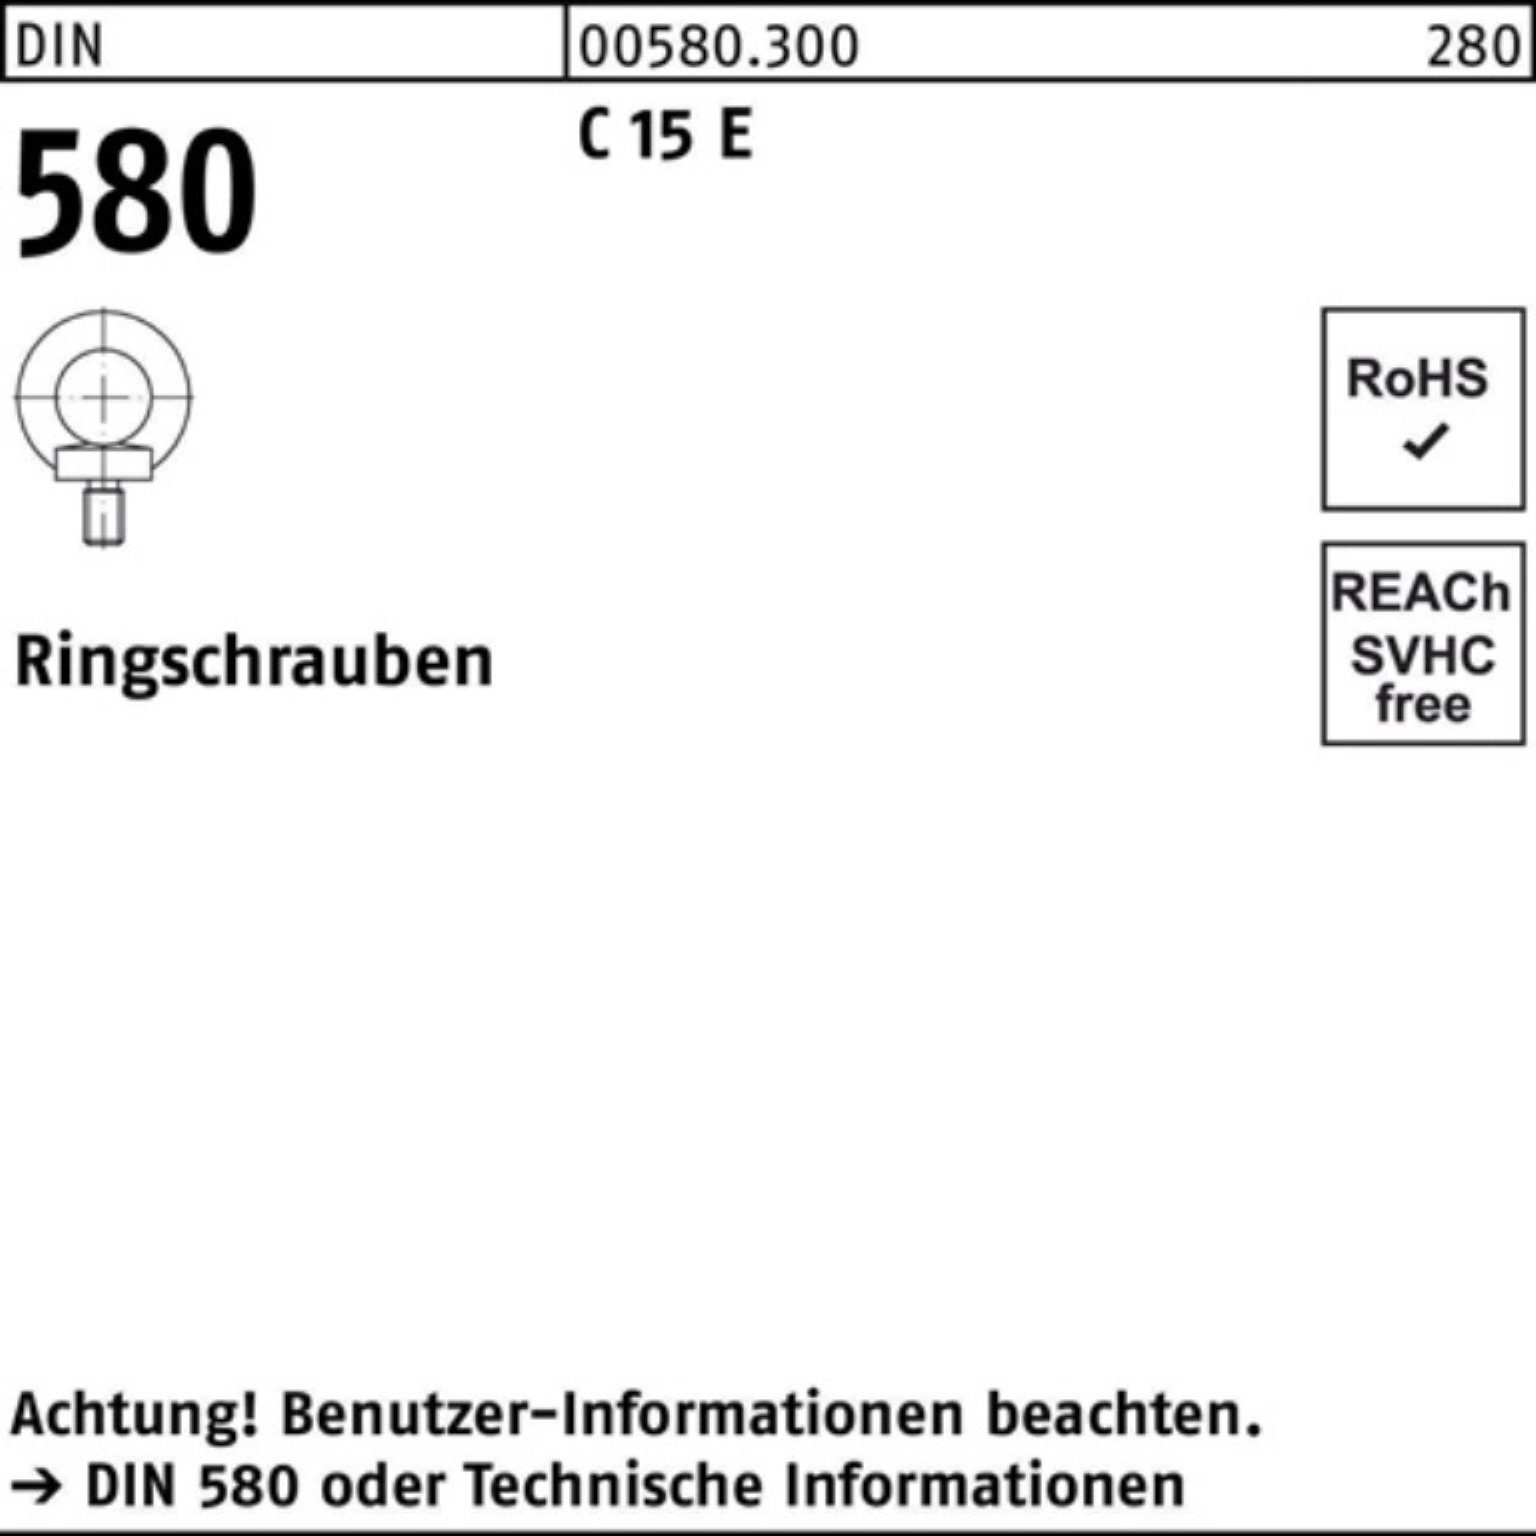 Reyher Schraube 100er Pack Ringschraube DIN 580 M45 C 15 E 1 Stück DIN 580 C 15 E Rin